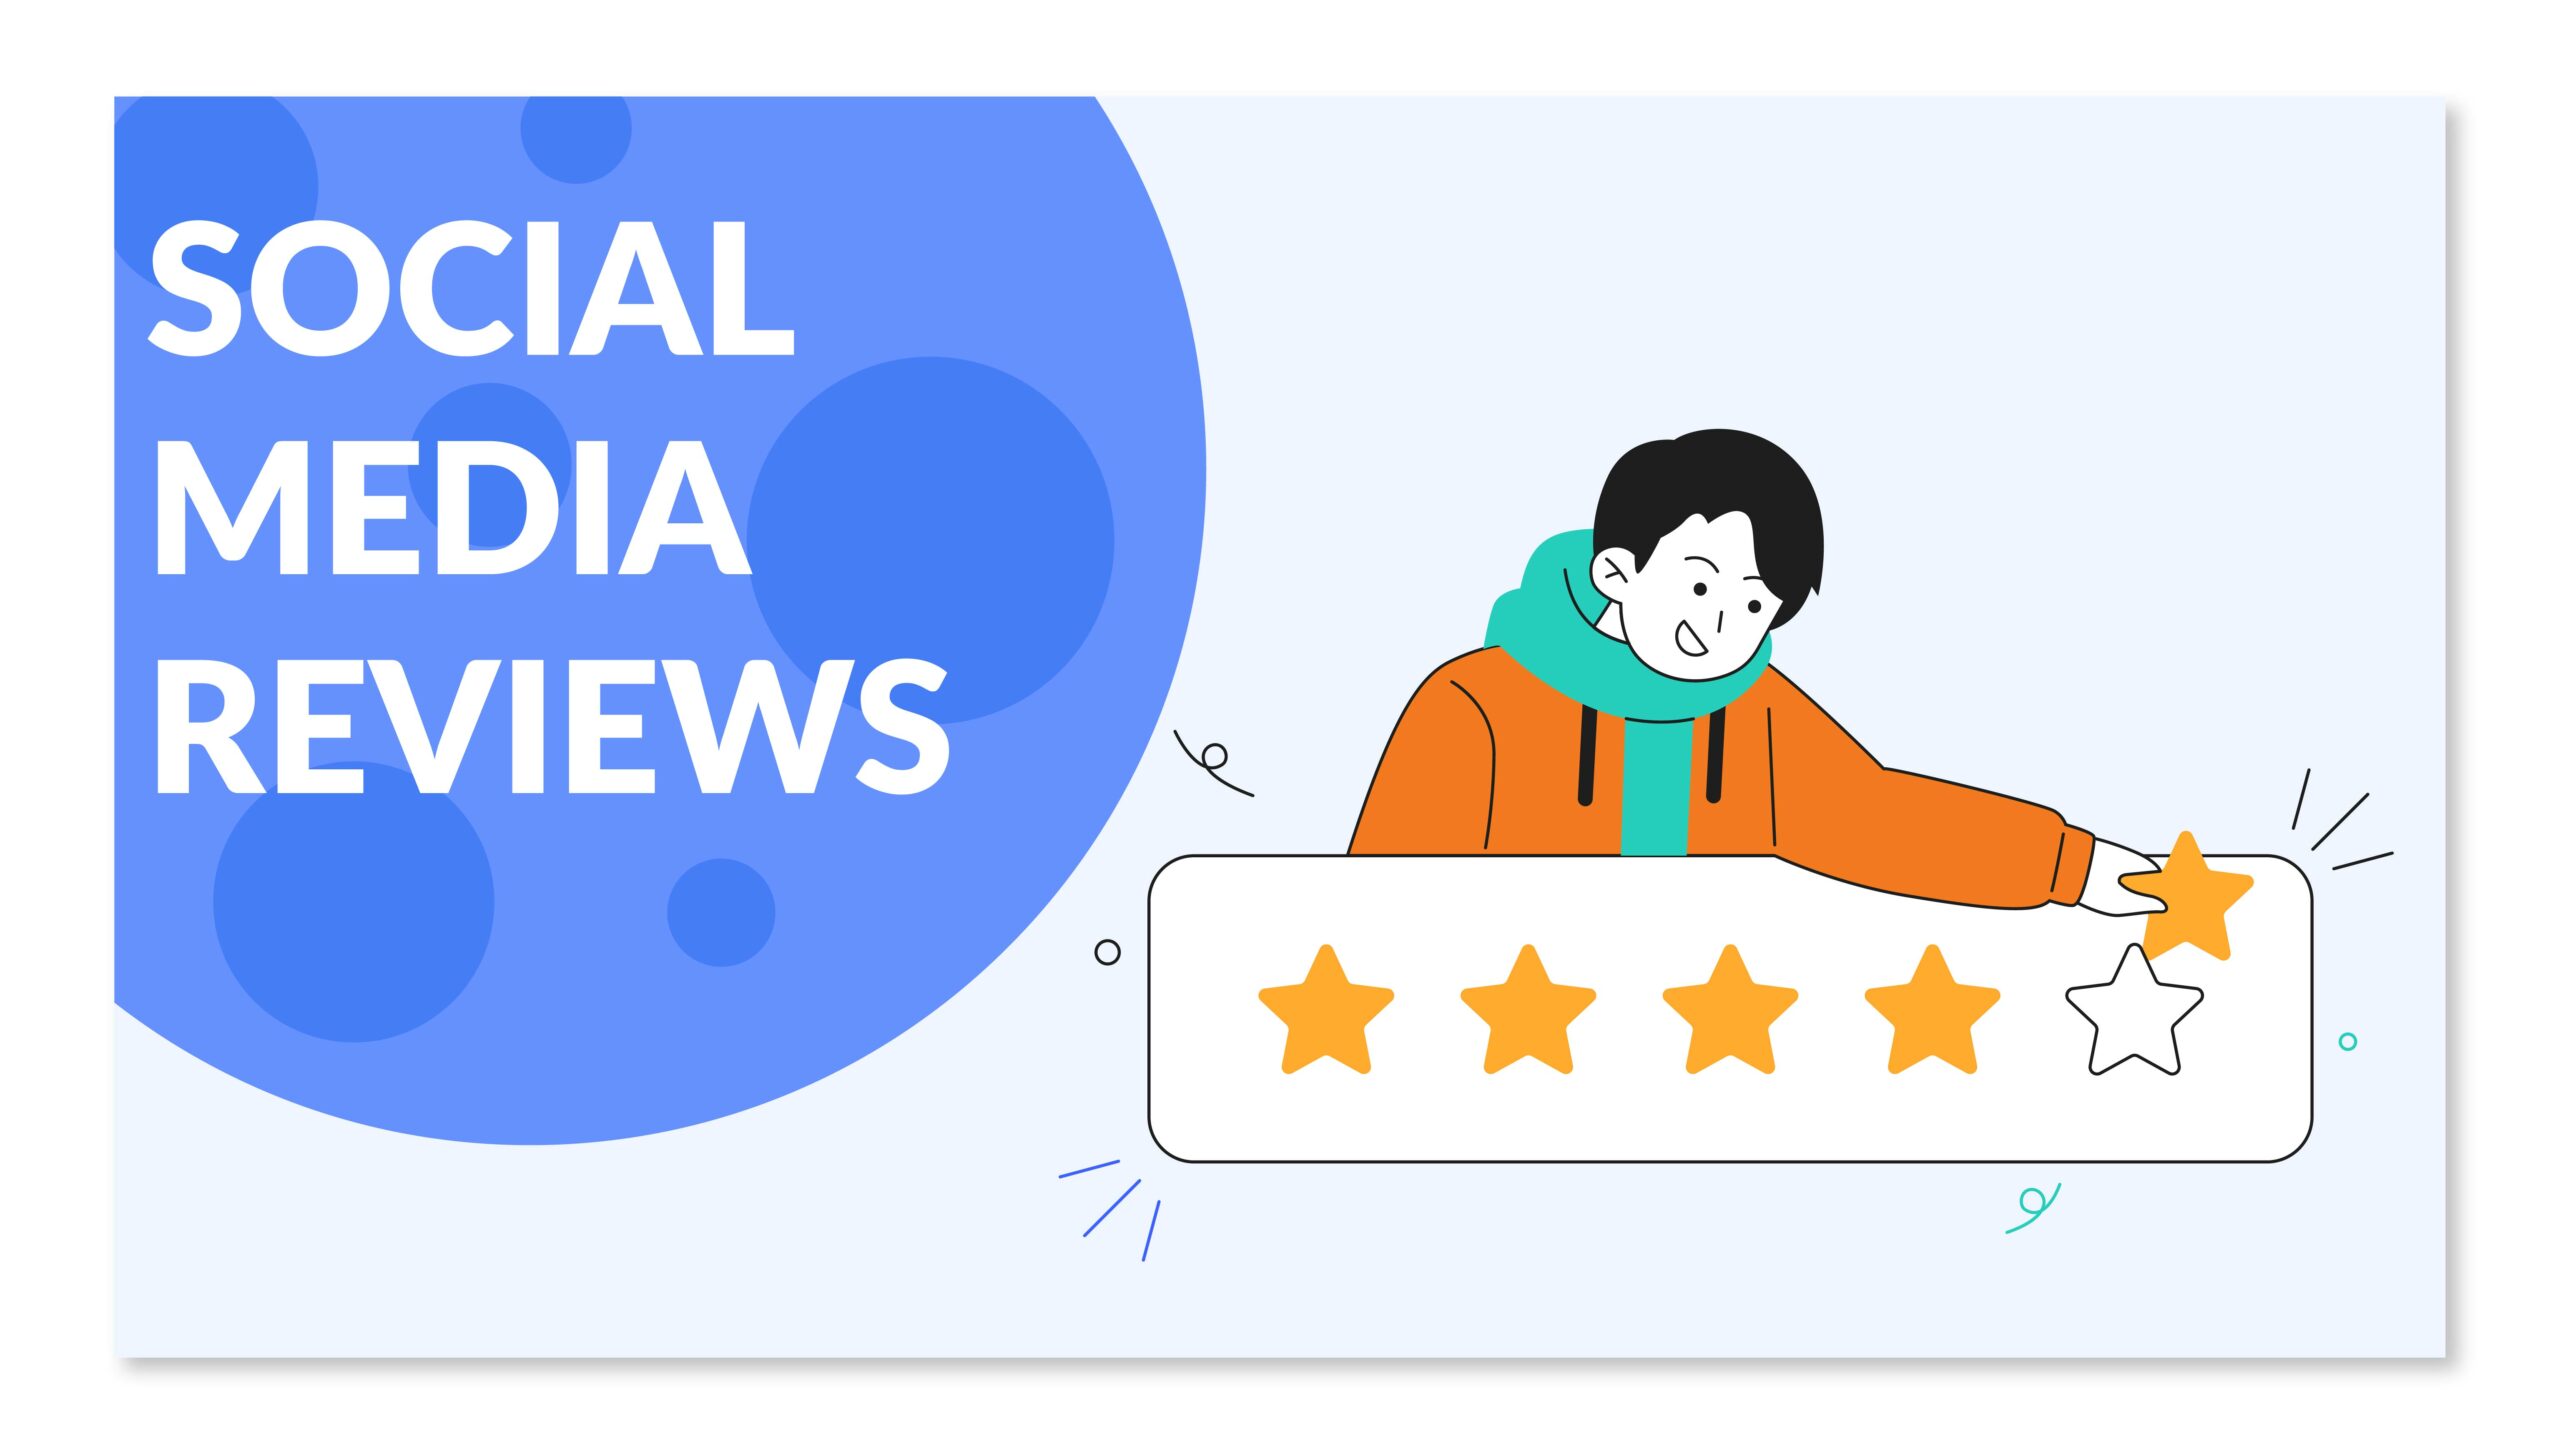 Social media reviews